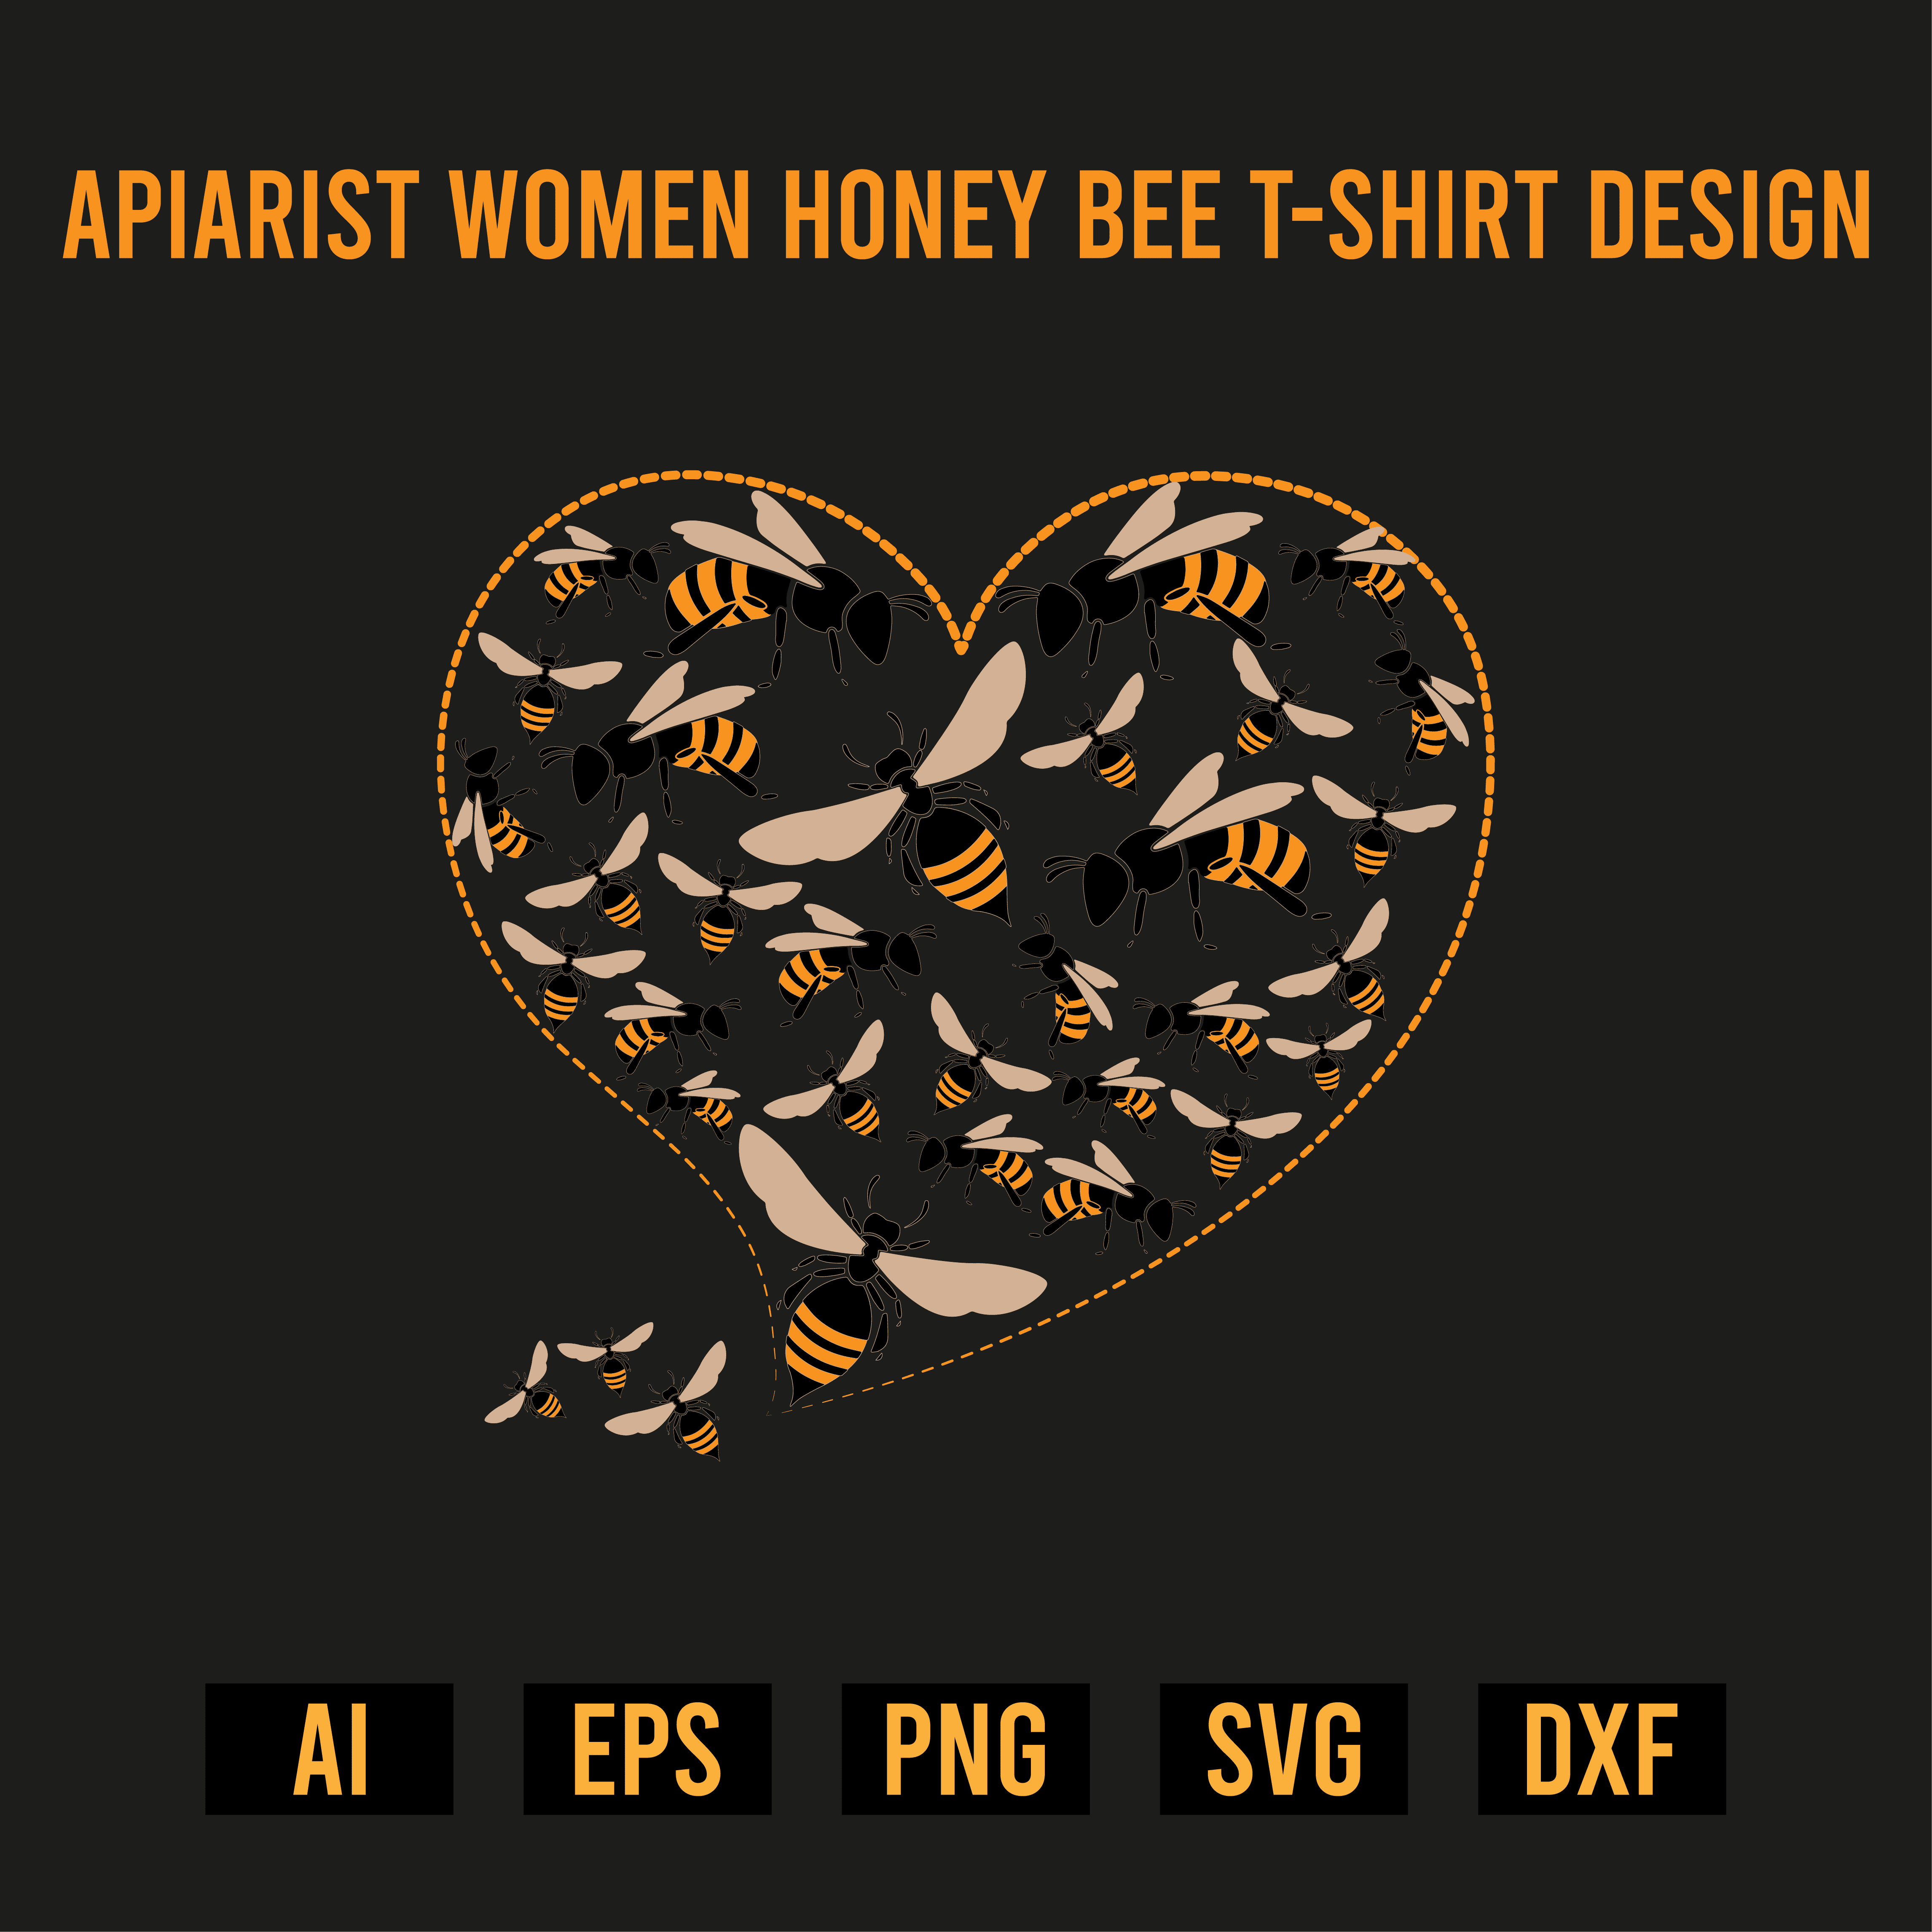 Apiarist Women Honey Bee T- Shirt Design cover image.